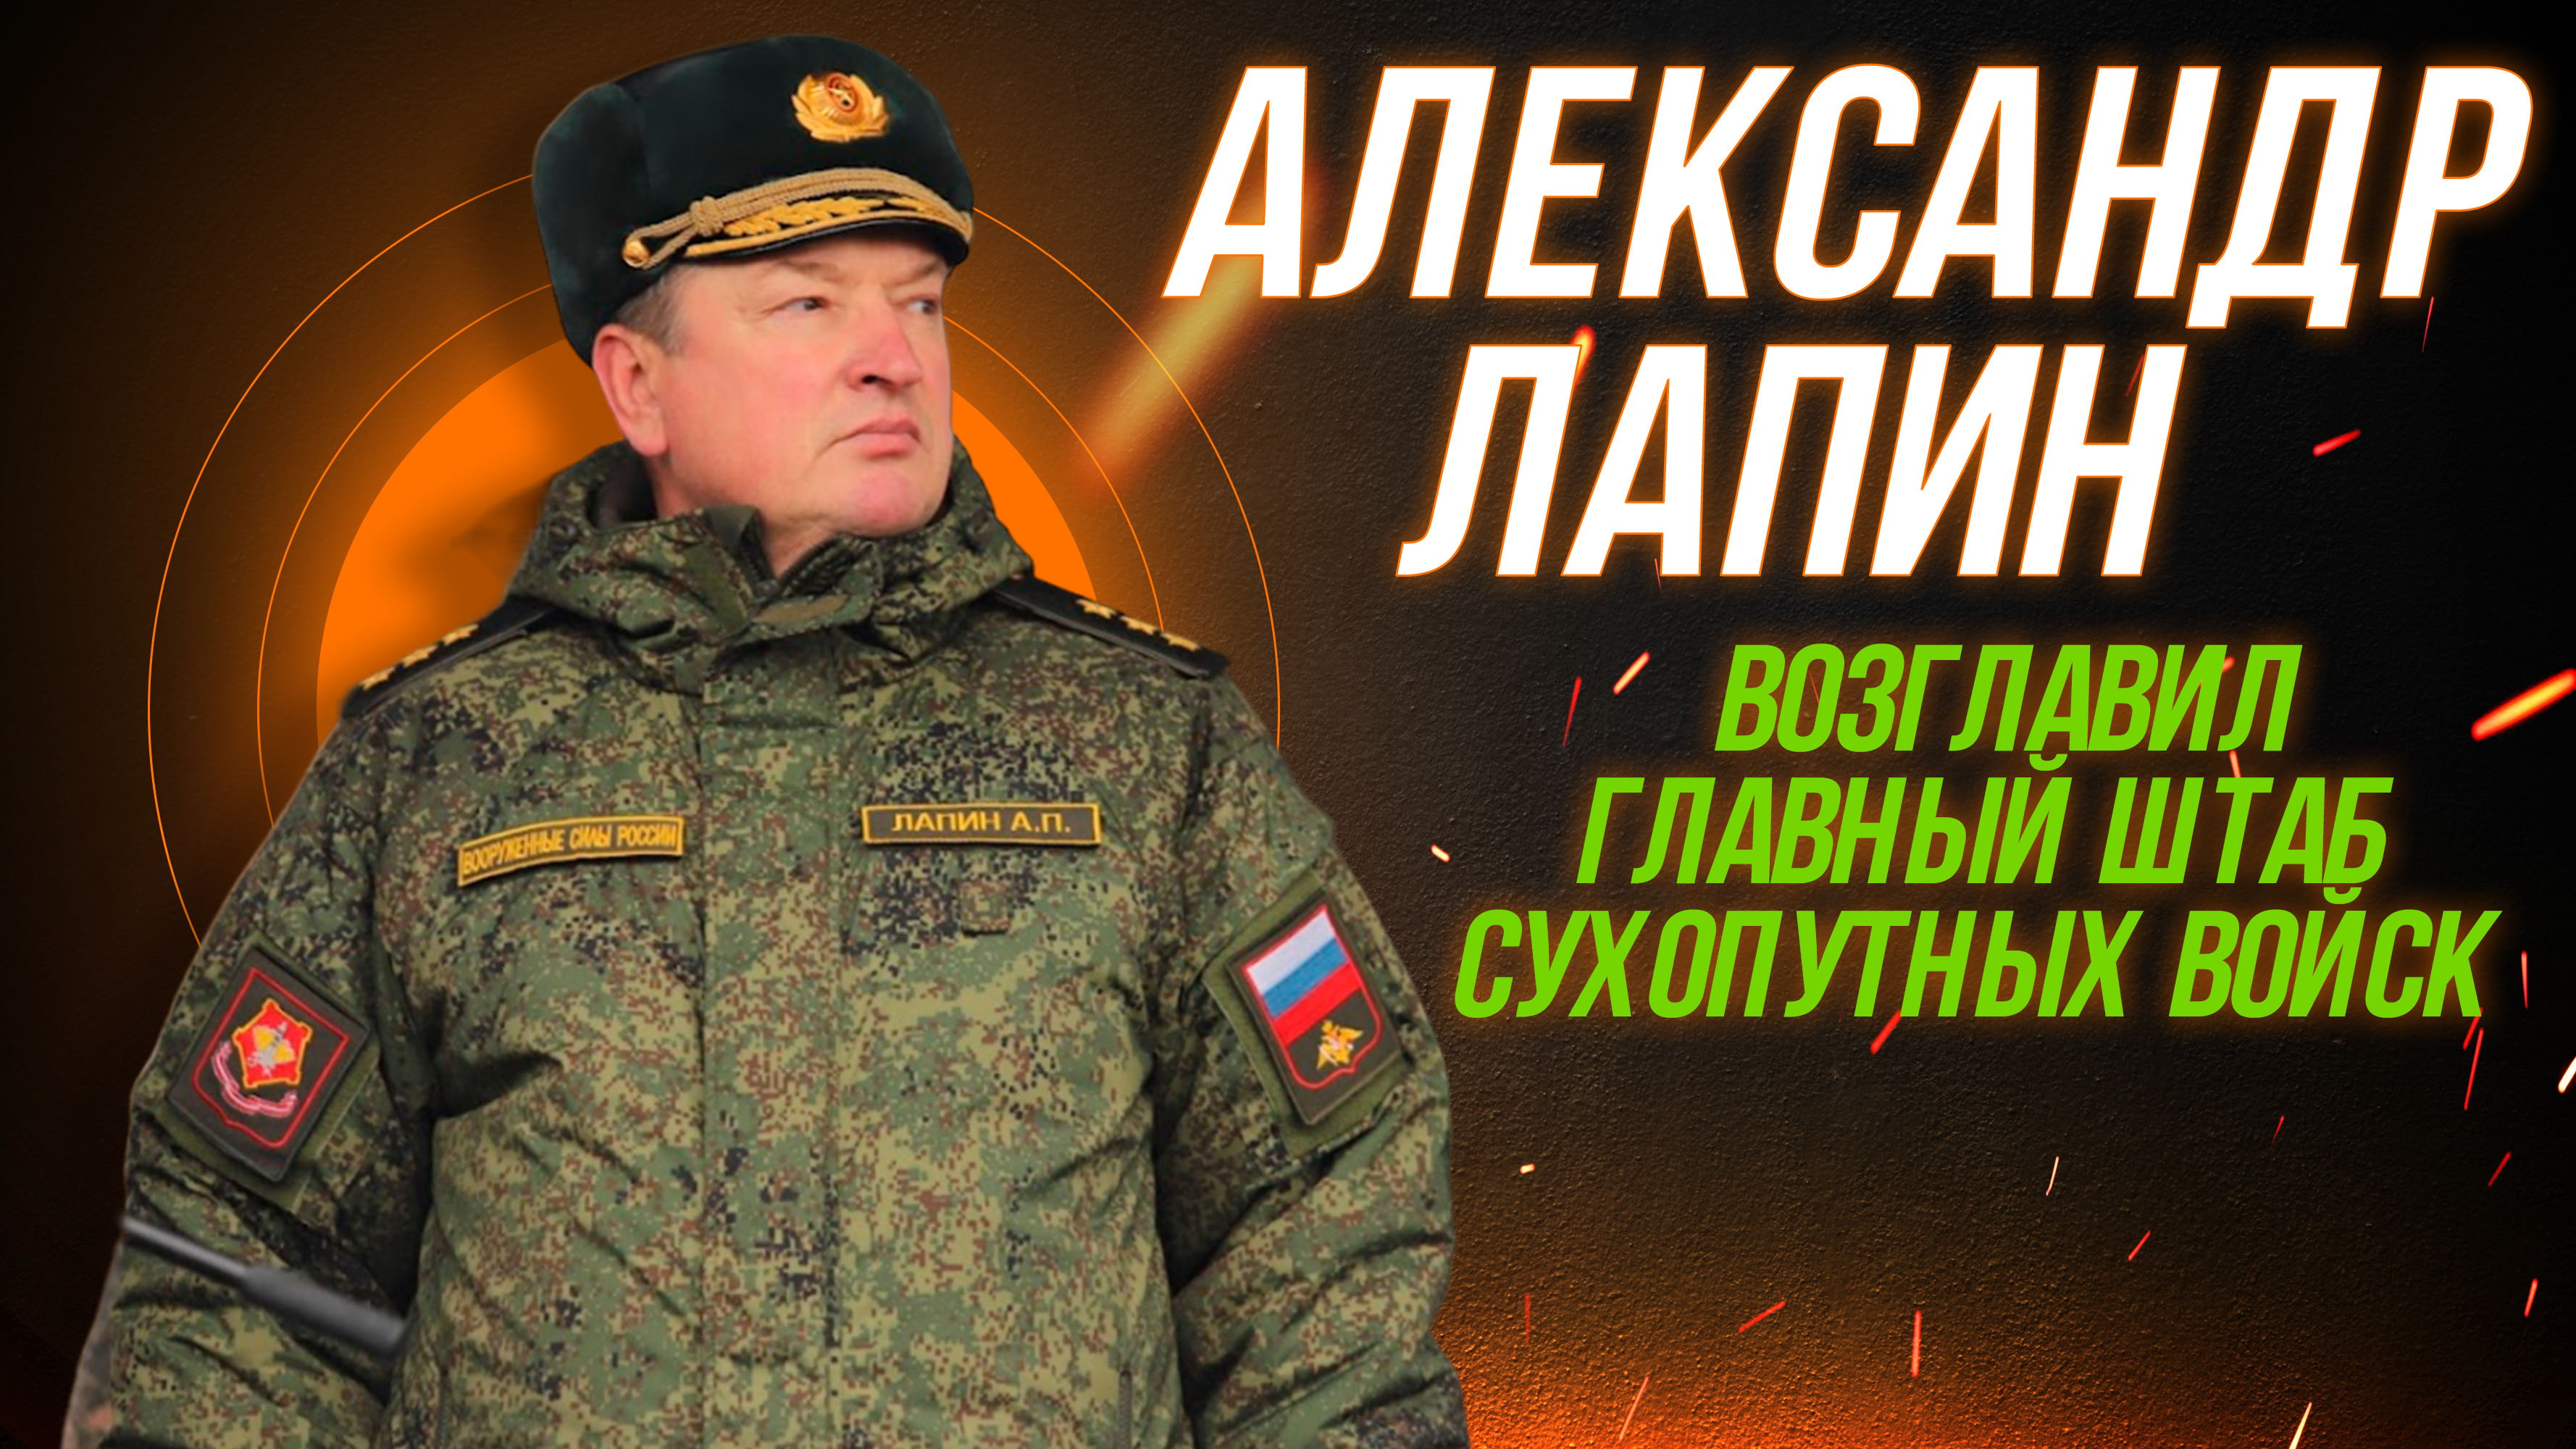 Подполковник лапин командир 1 танкового полка